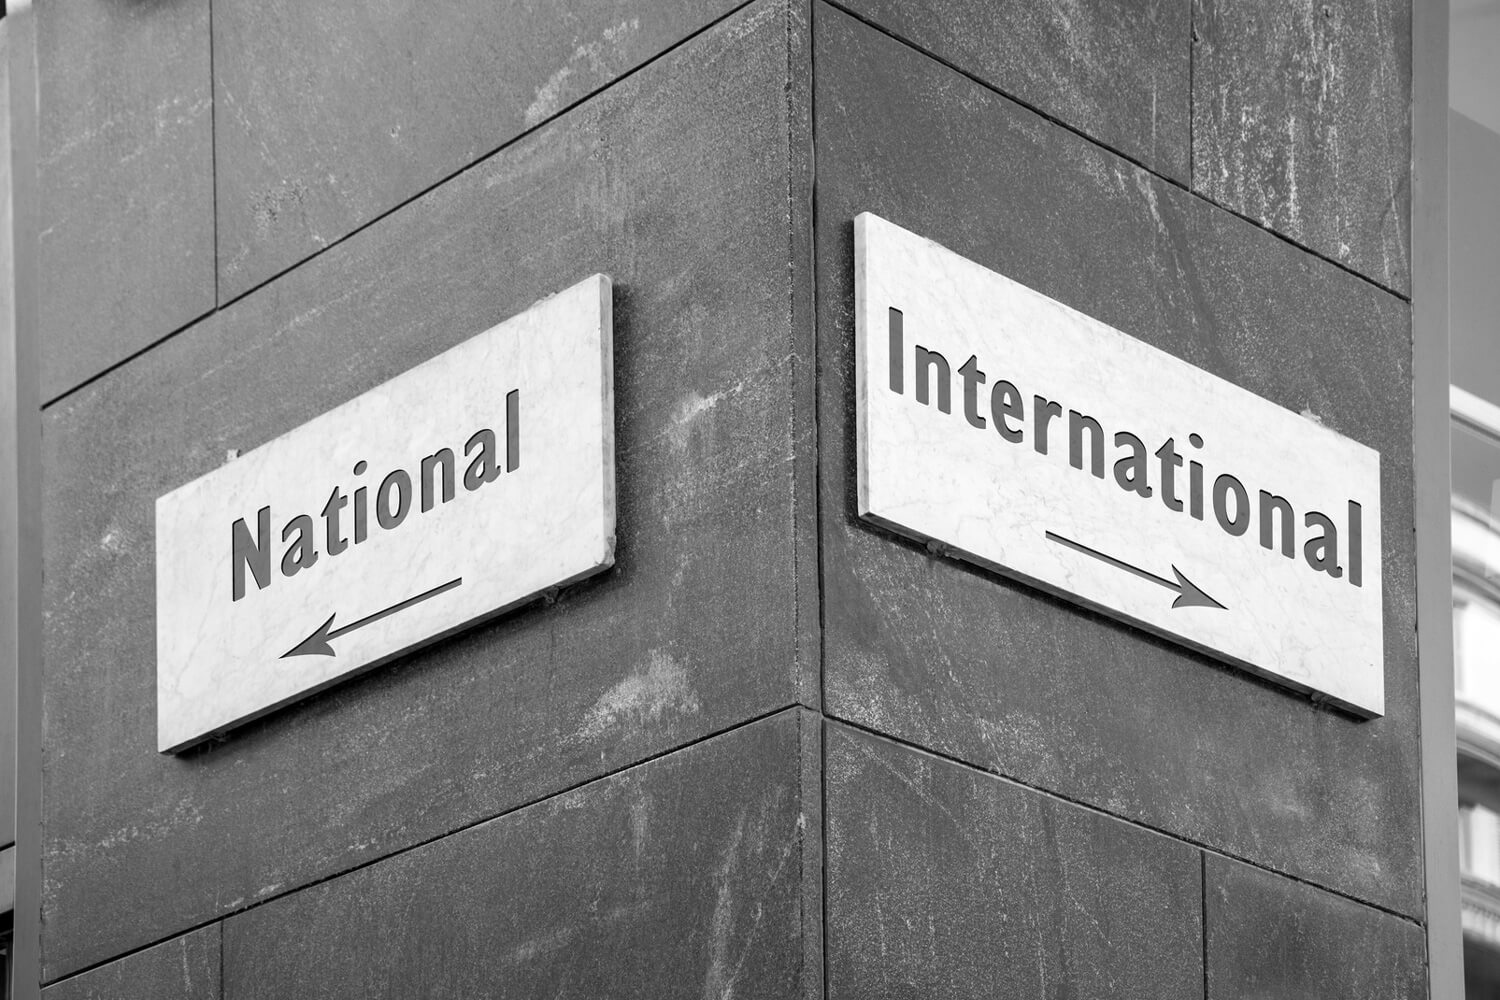 Handel National & International